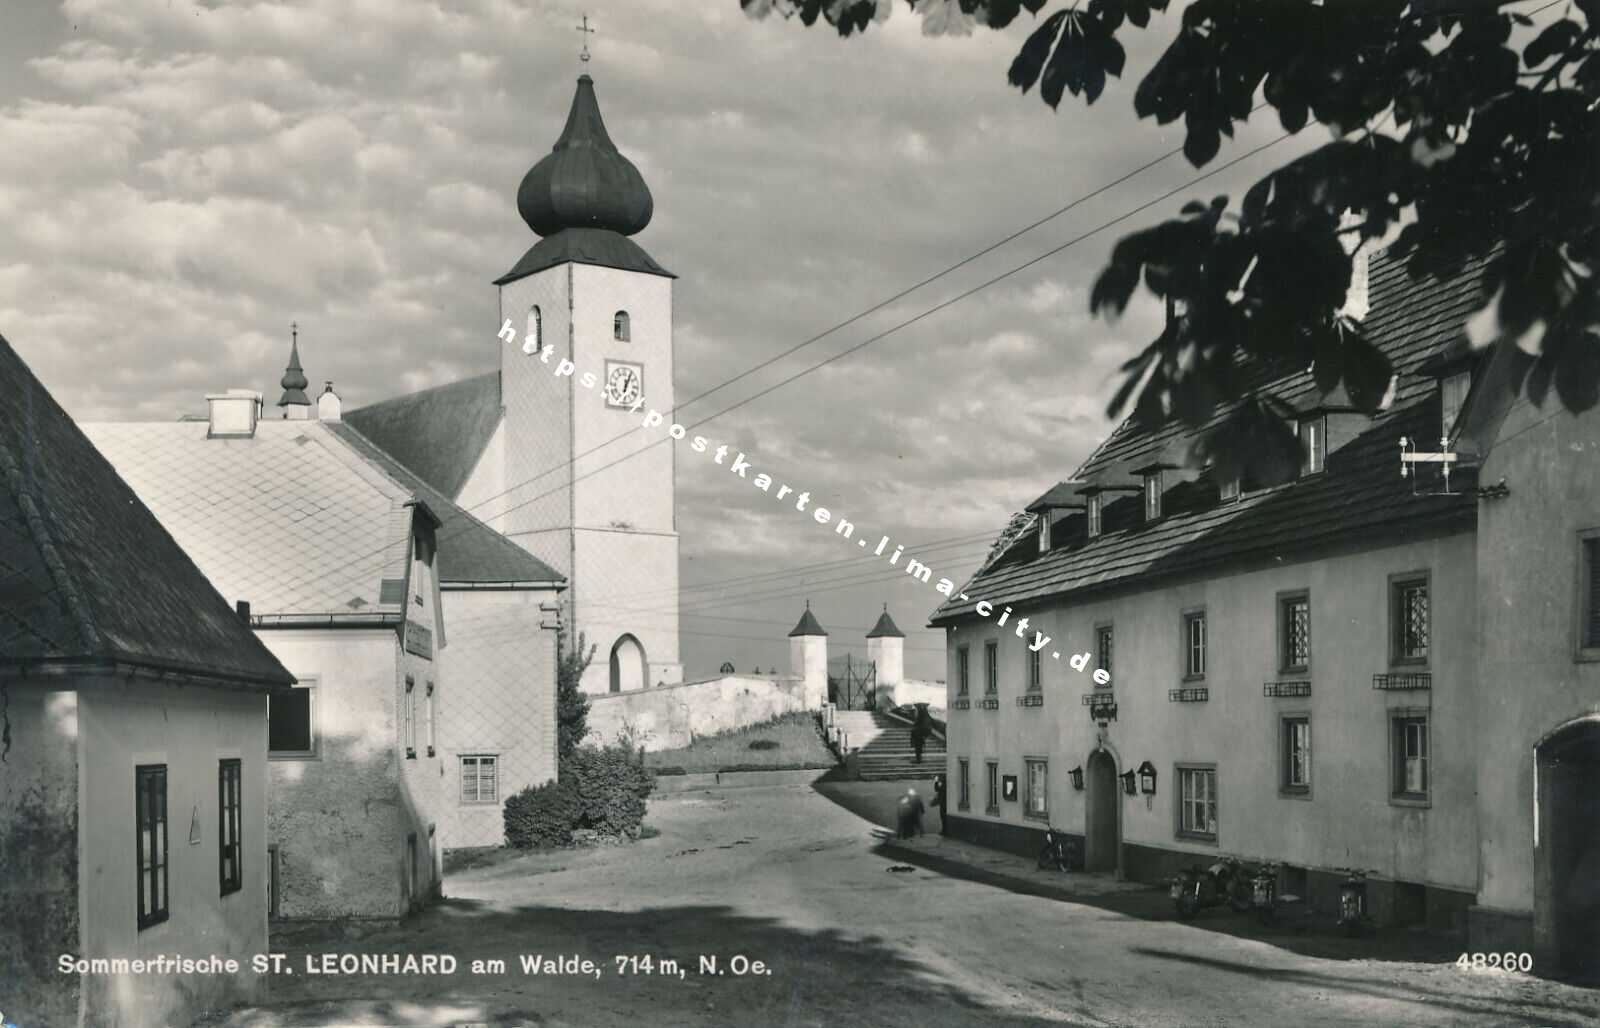 St. Leonhard am Walde 1958